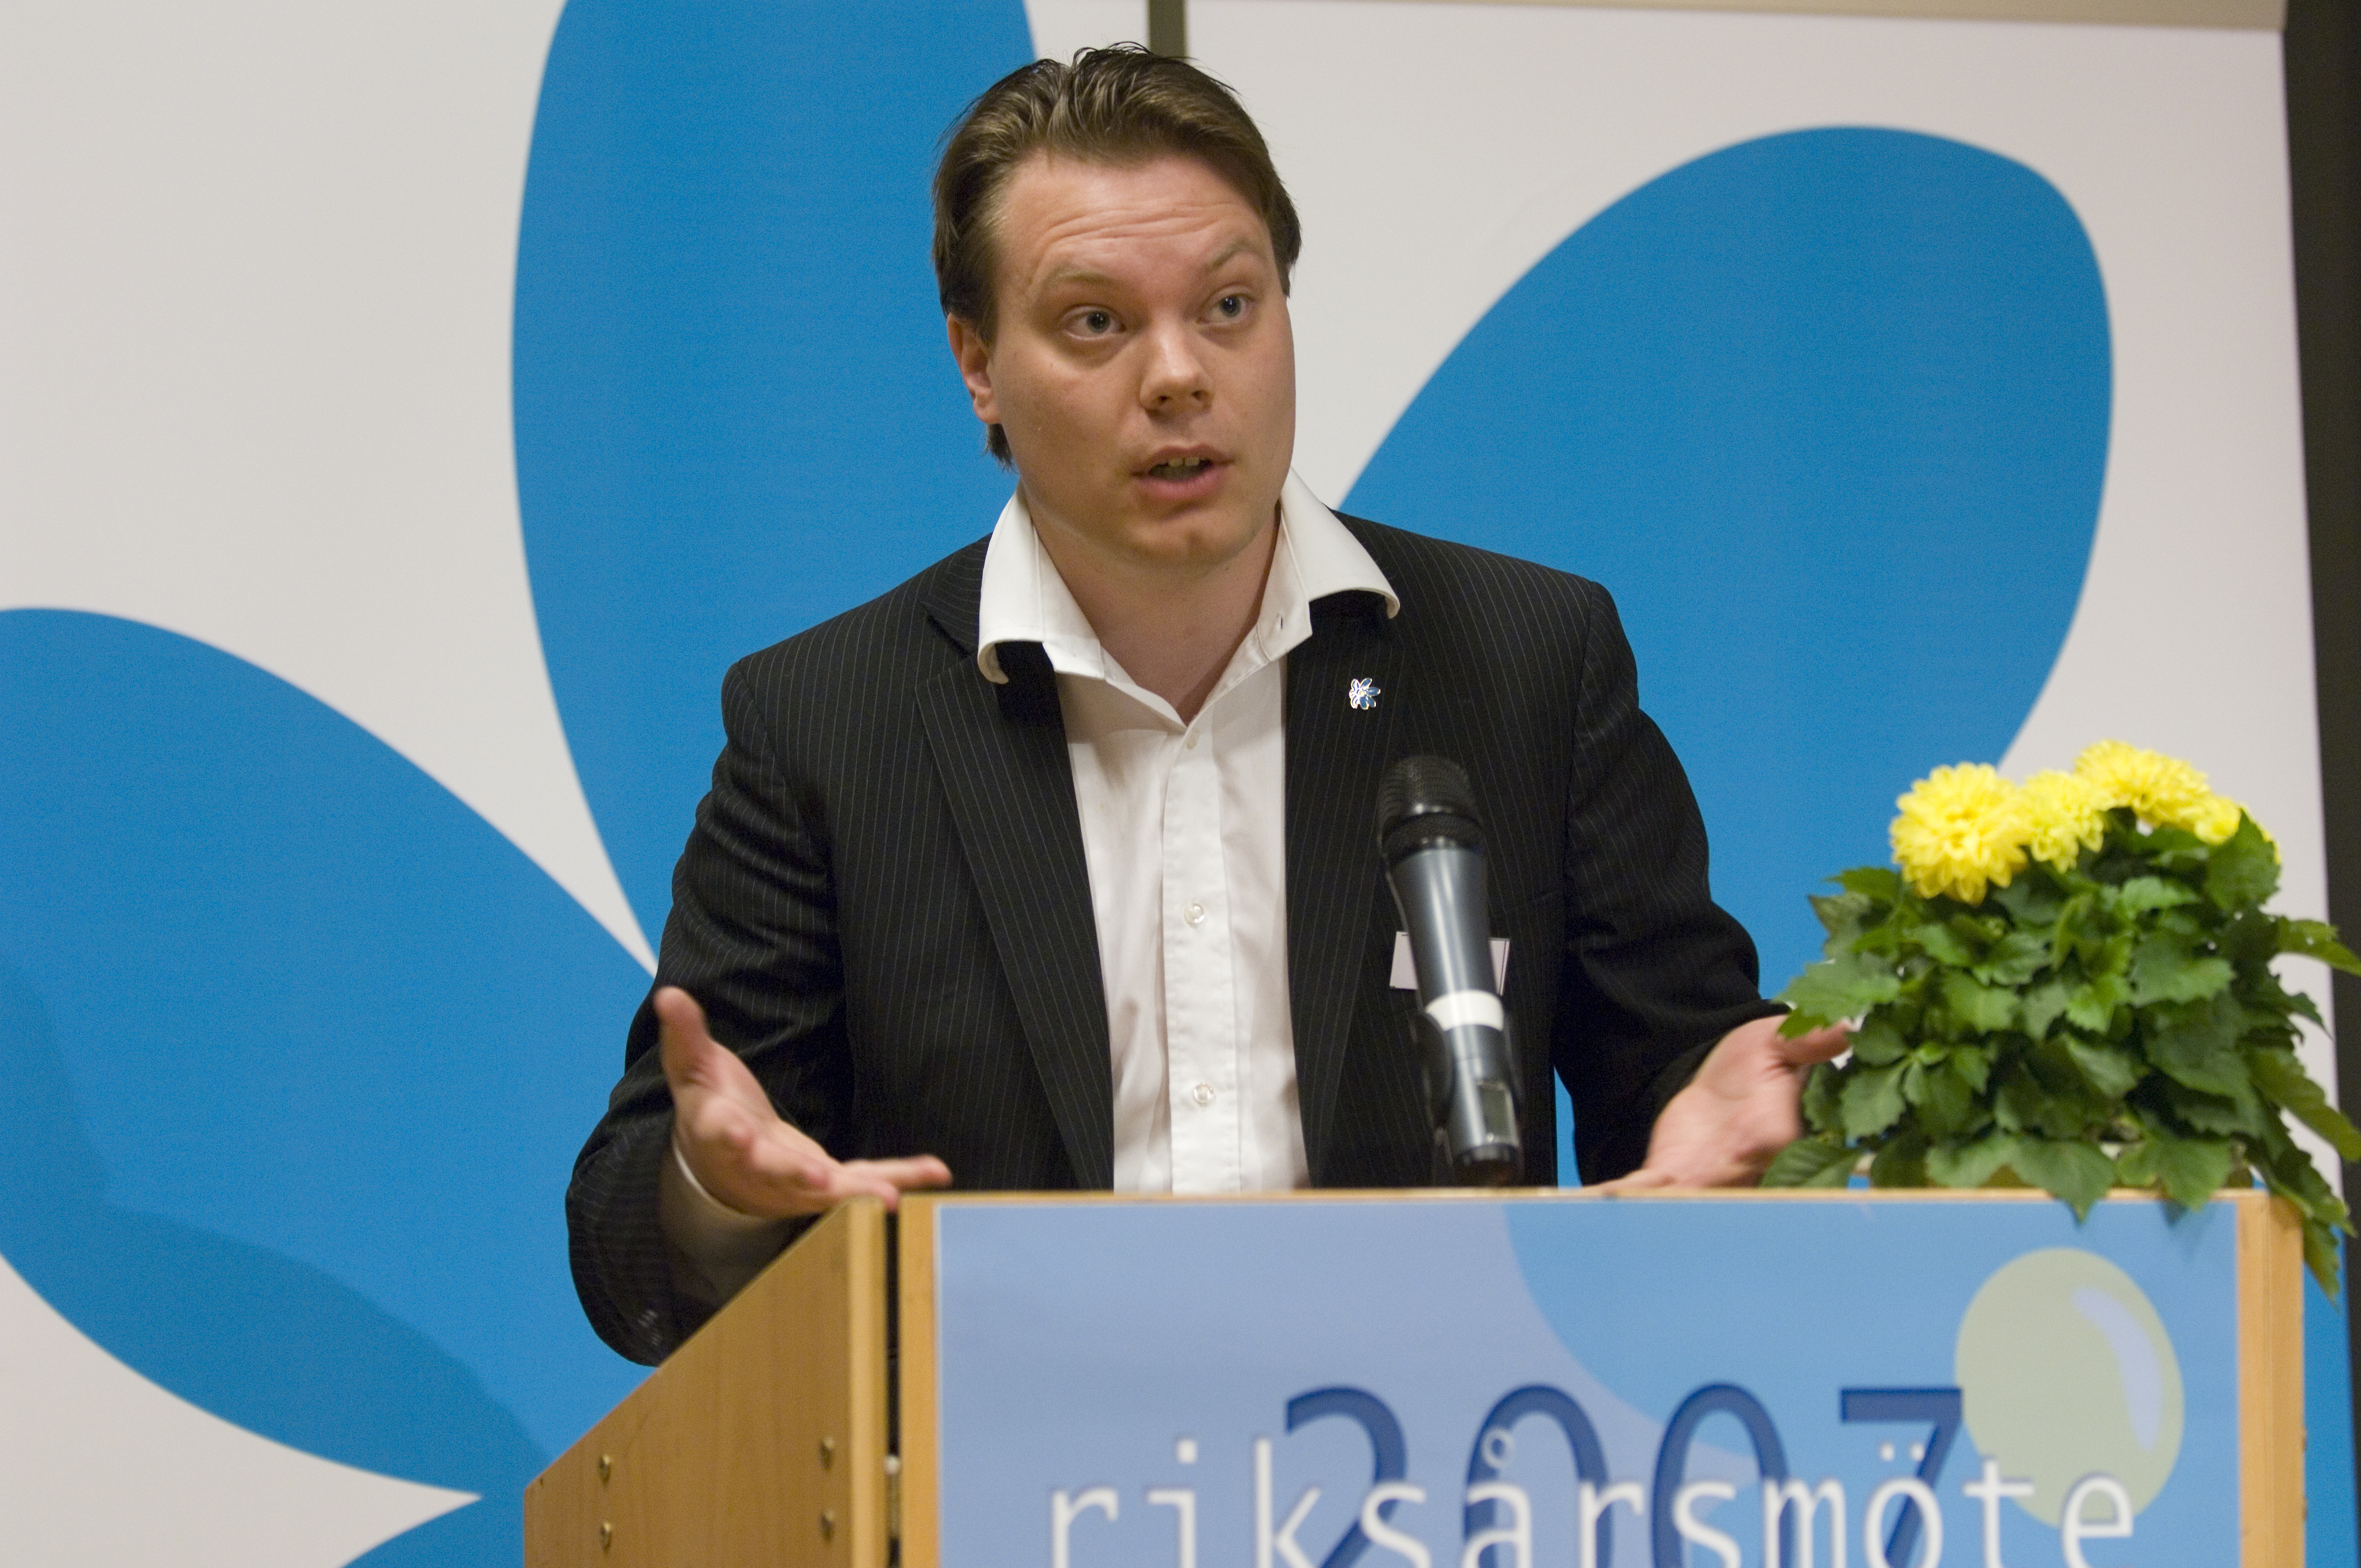 Martin Kinnunen, Jimmie Åkesson, Mattias Karlsson, Politik, Sverigedemokraterna